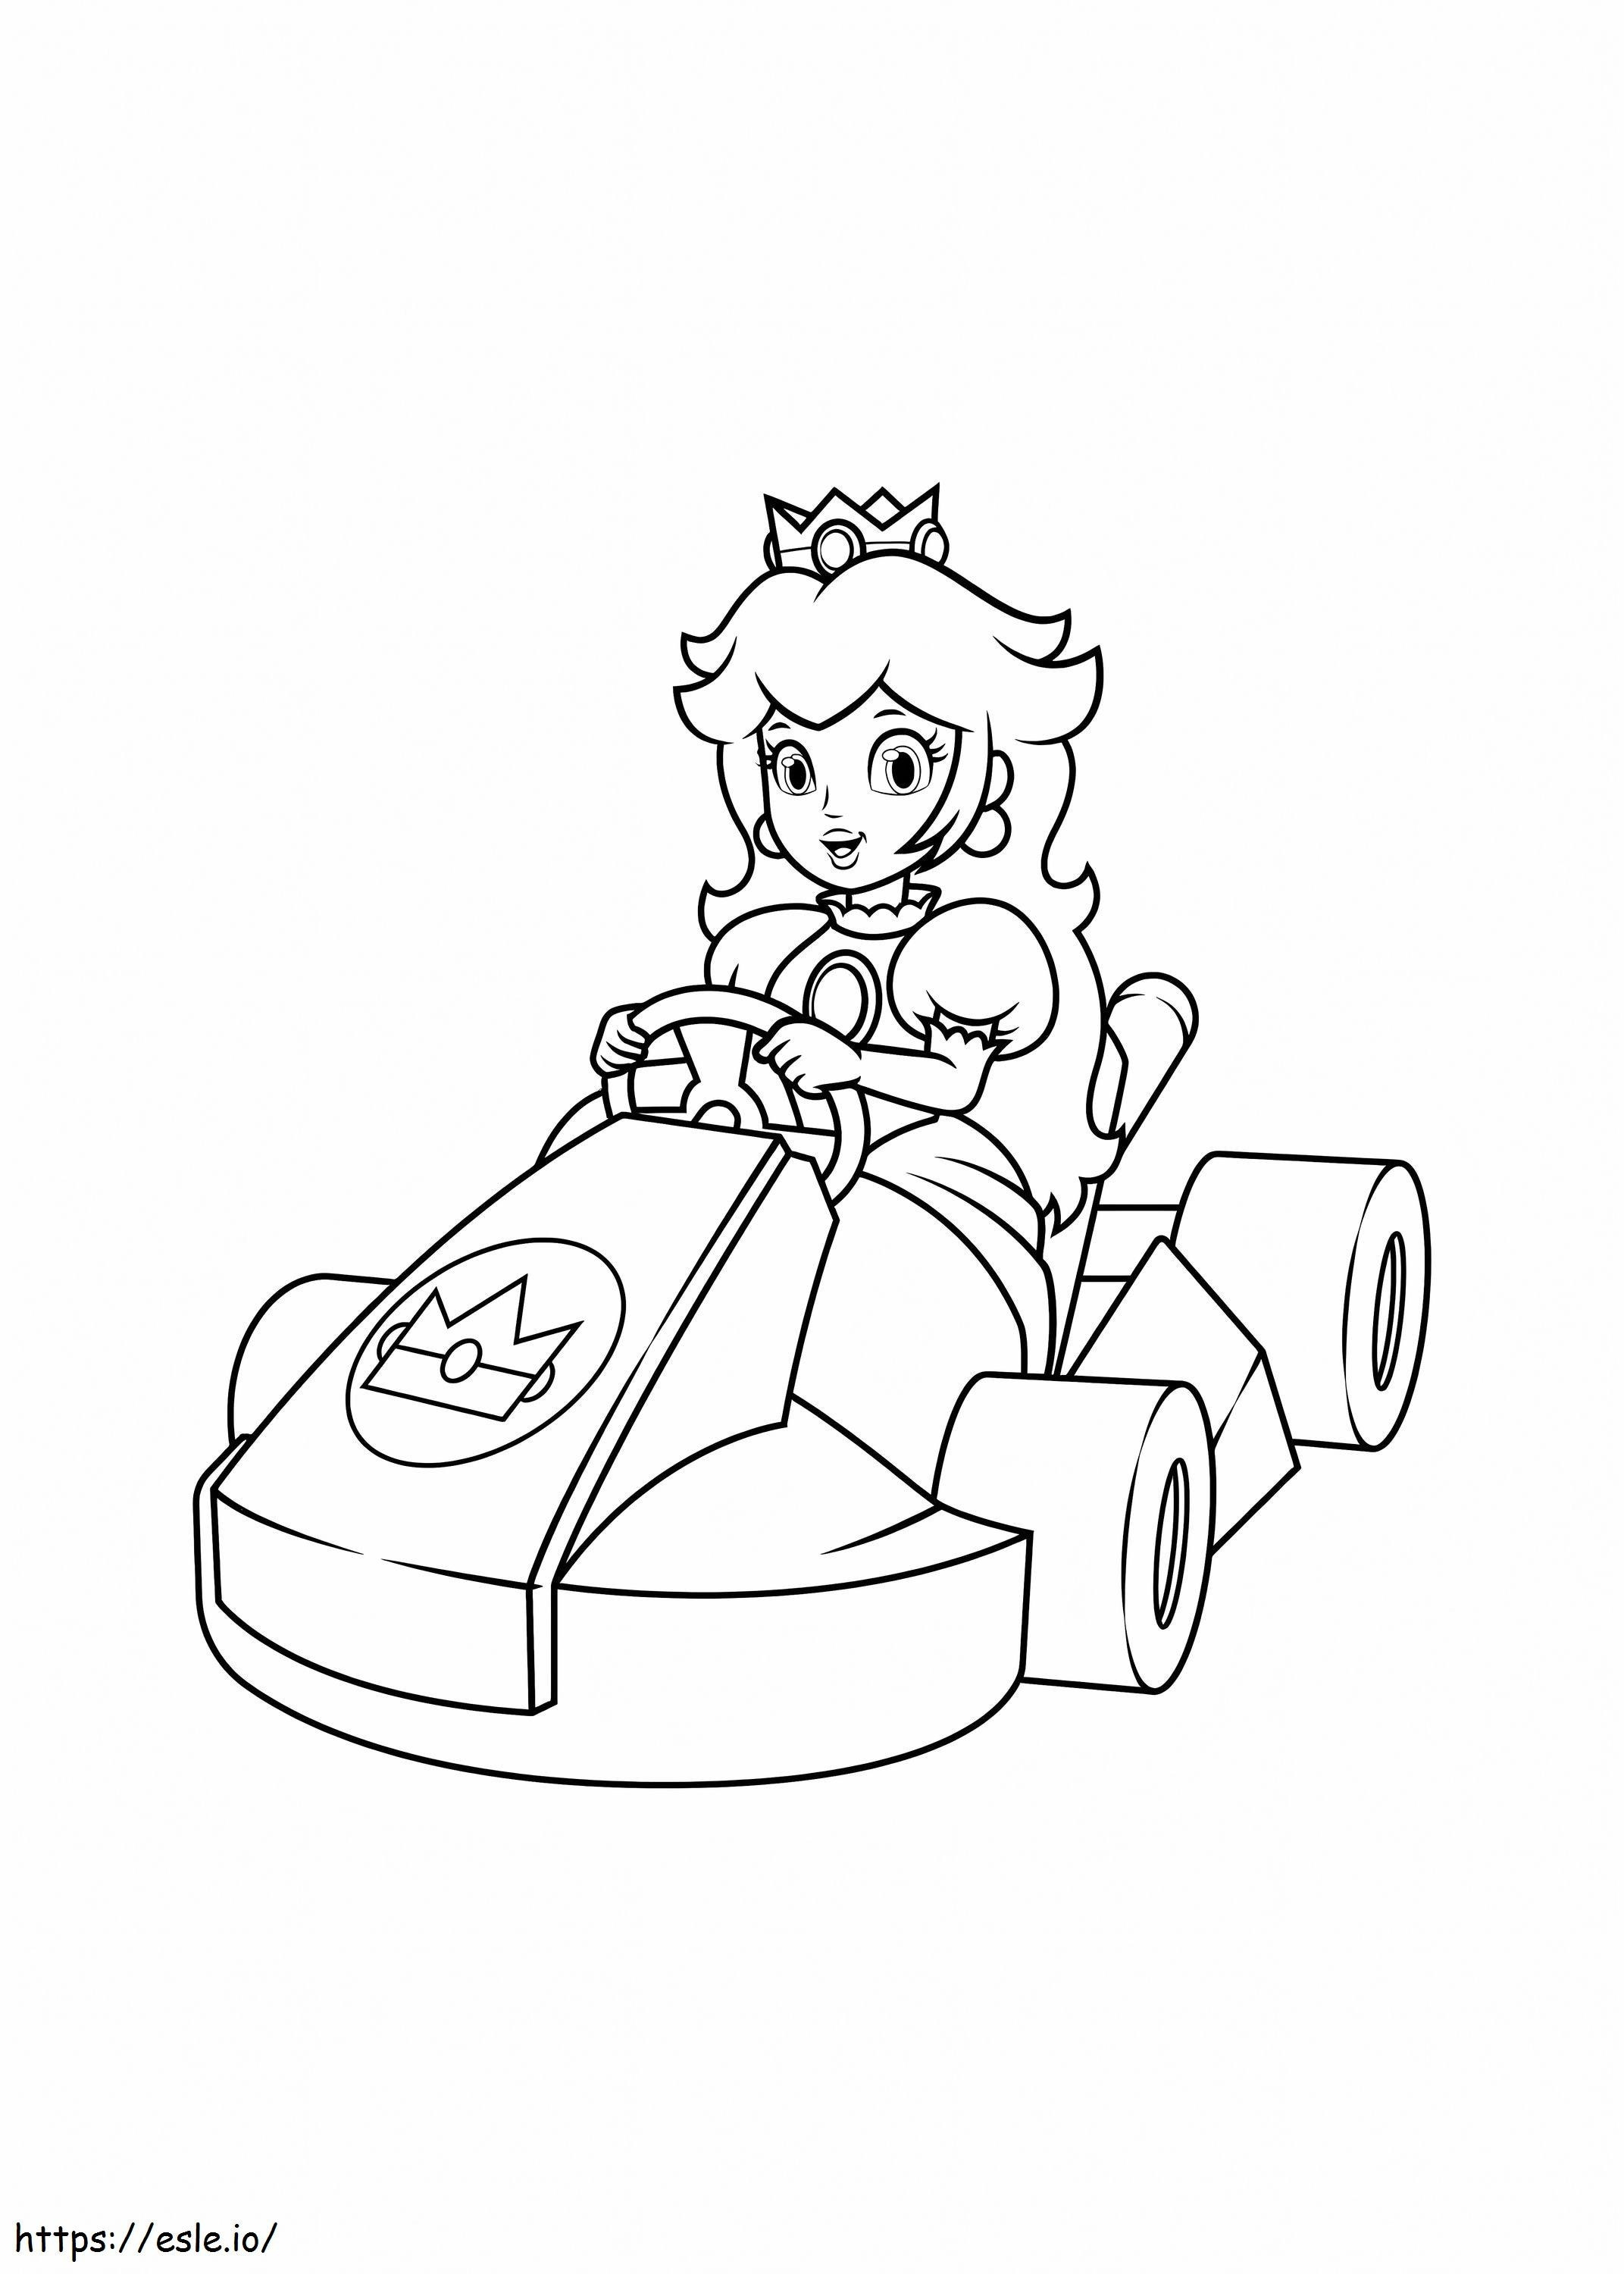 Princess Peach'S Race Car coloring page